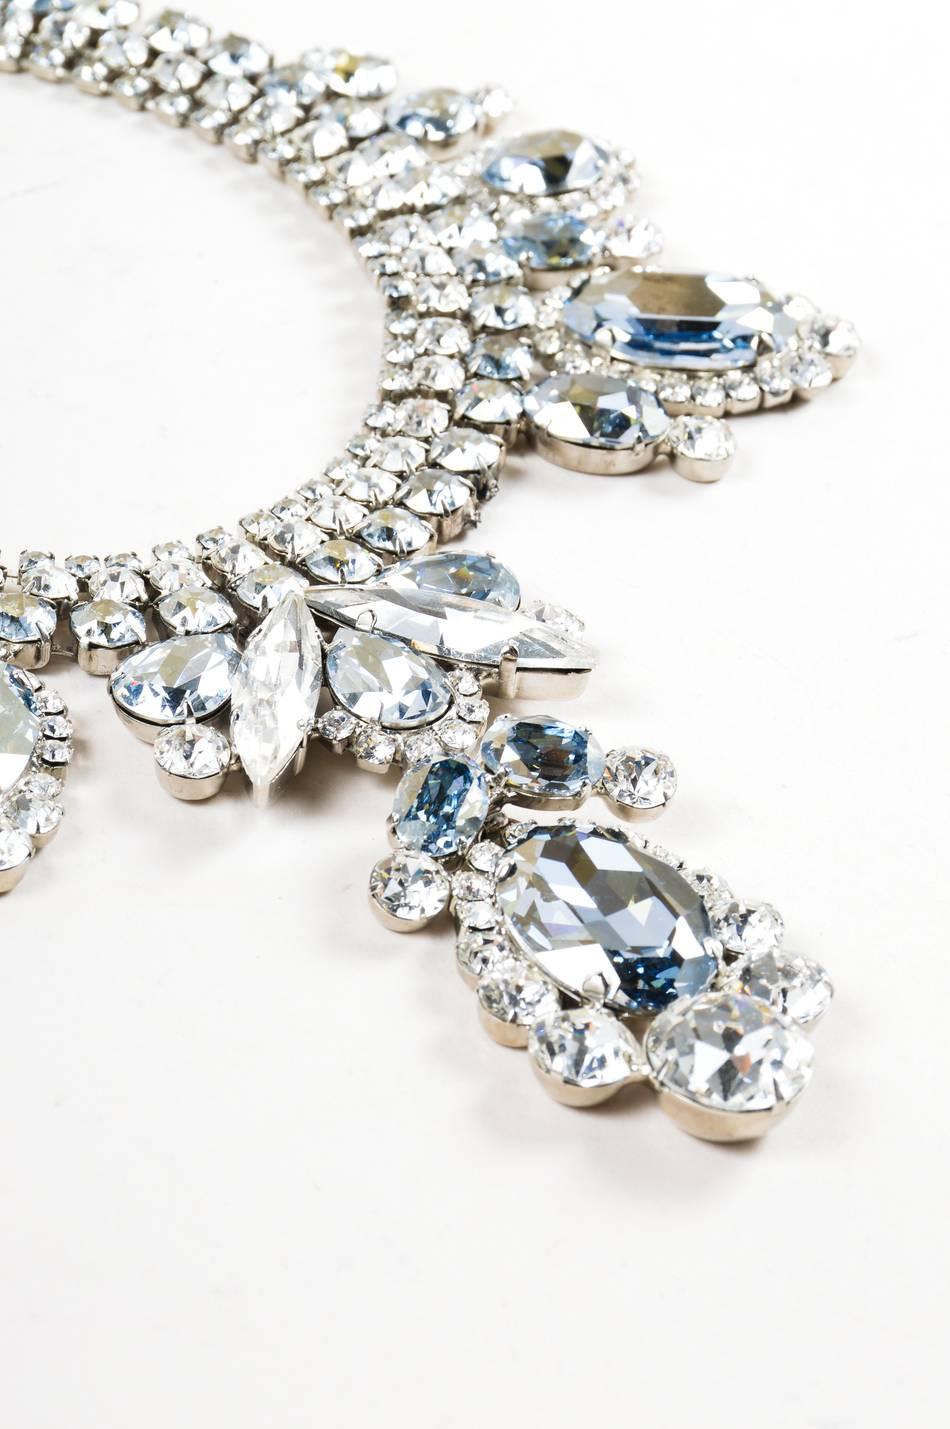 Thorin & Co. Silver Tone Blue Glass Rhinestone Statement Bib Necklace In Good Condition For Sale In Chicago, IL